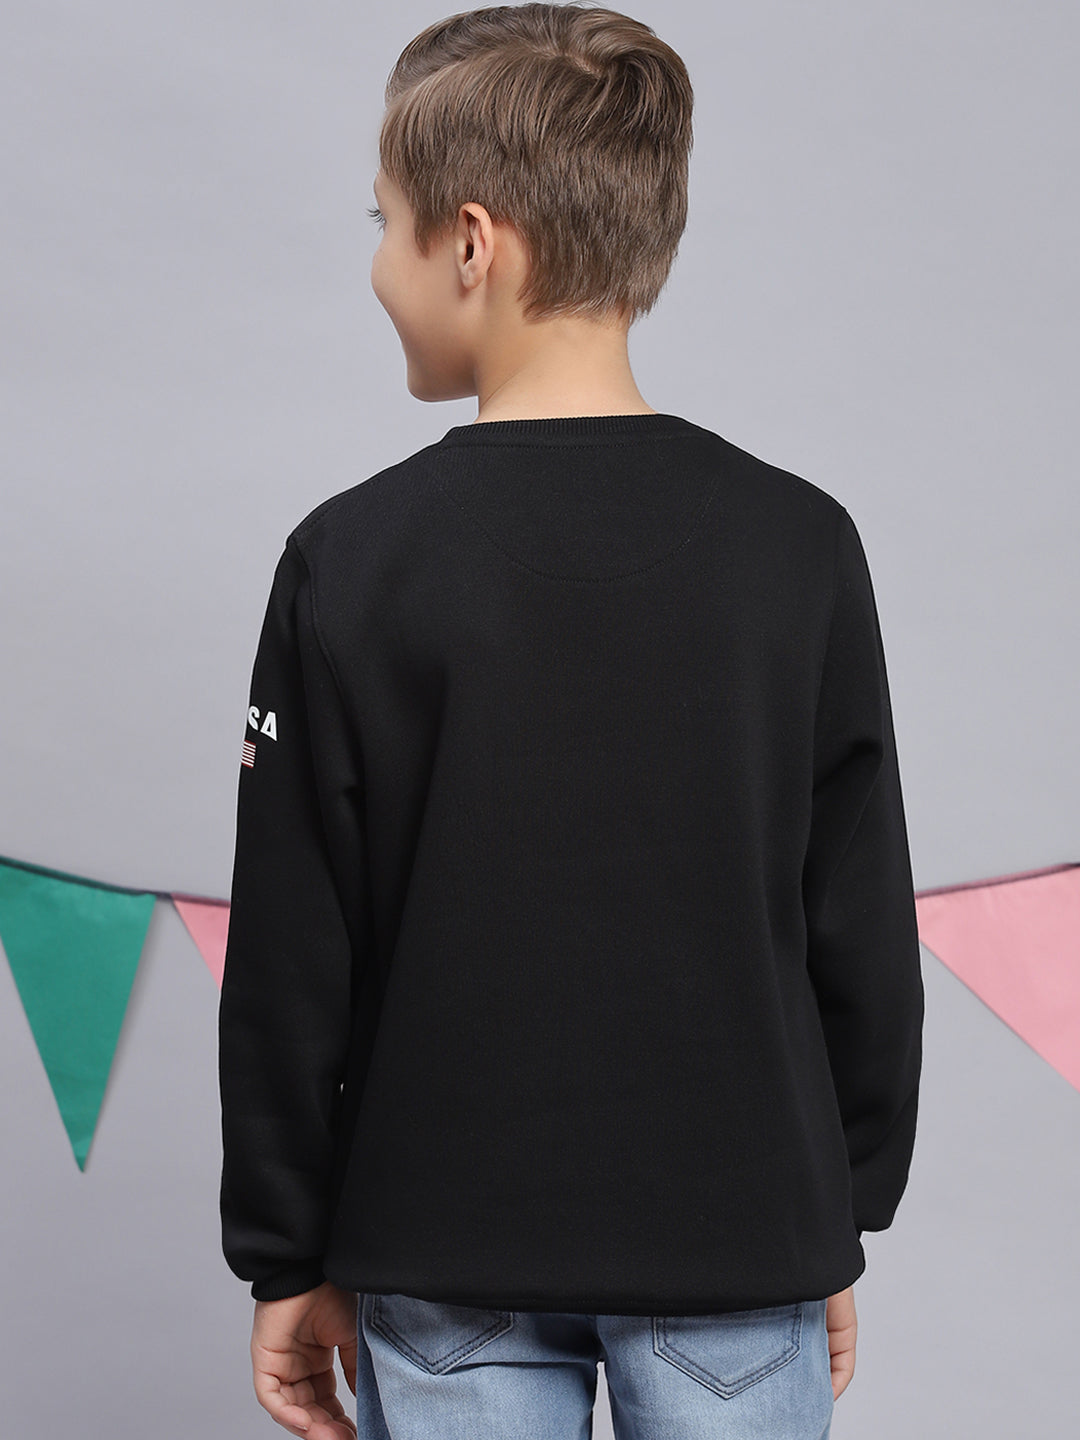 Boys Black Printed Round Neck Full Sleeve Sweatshirt